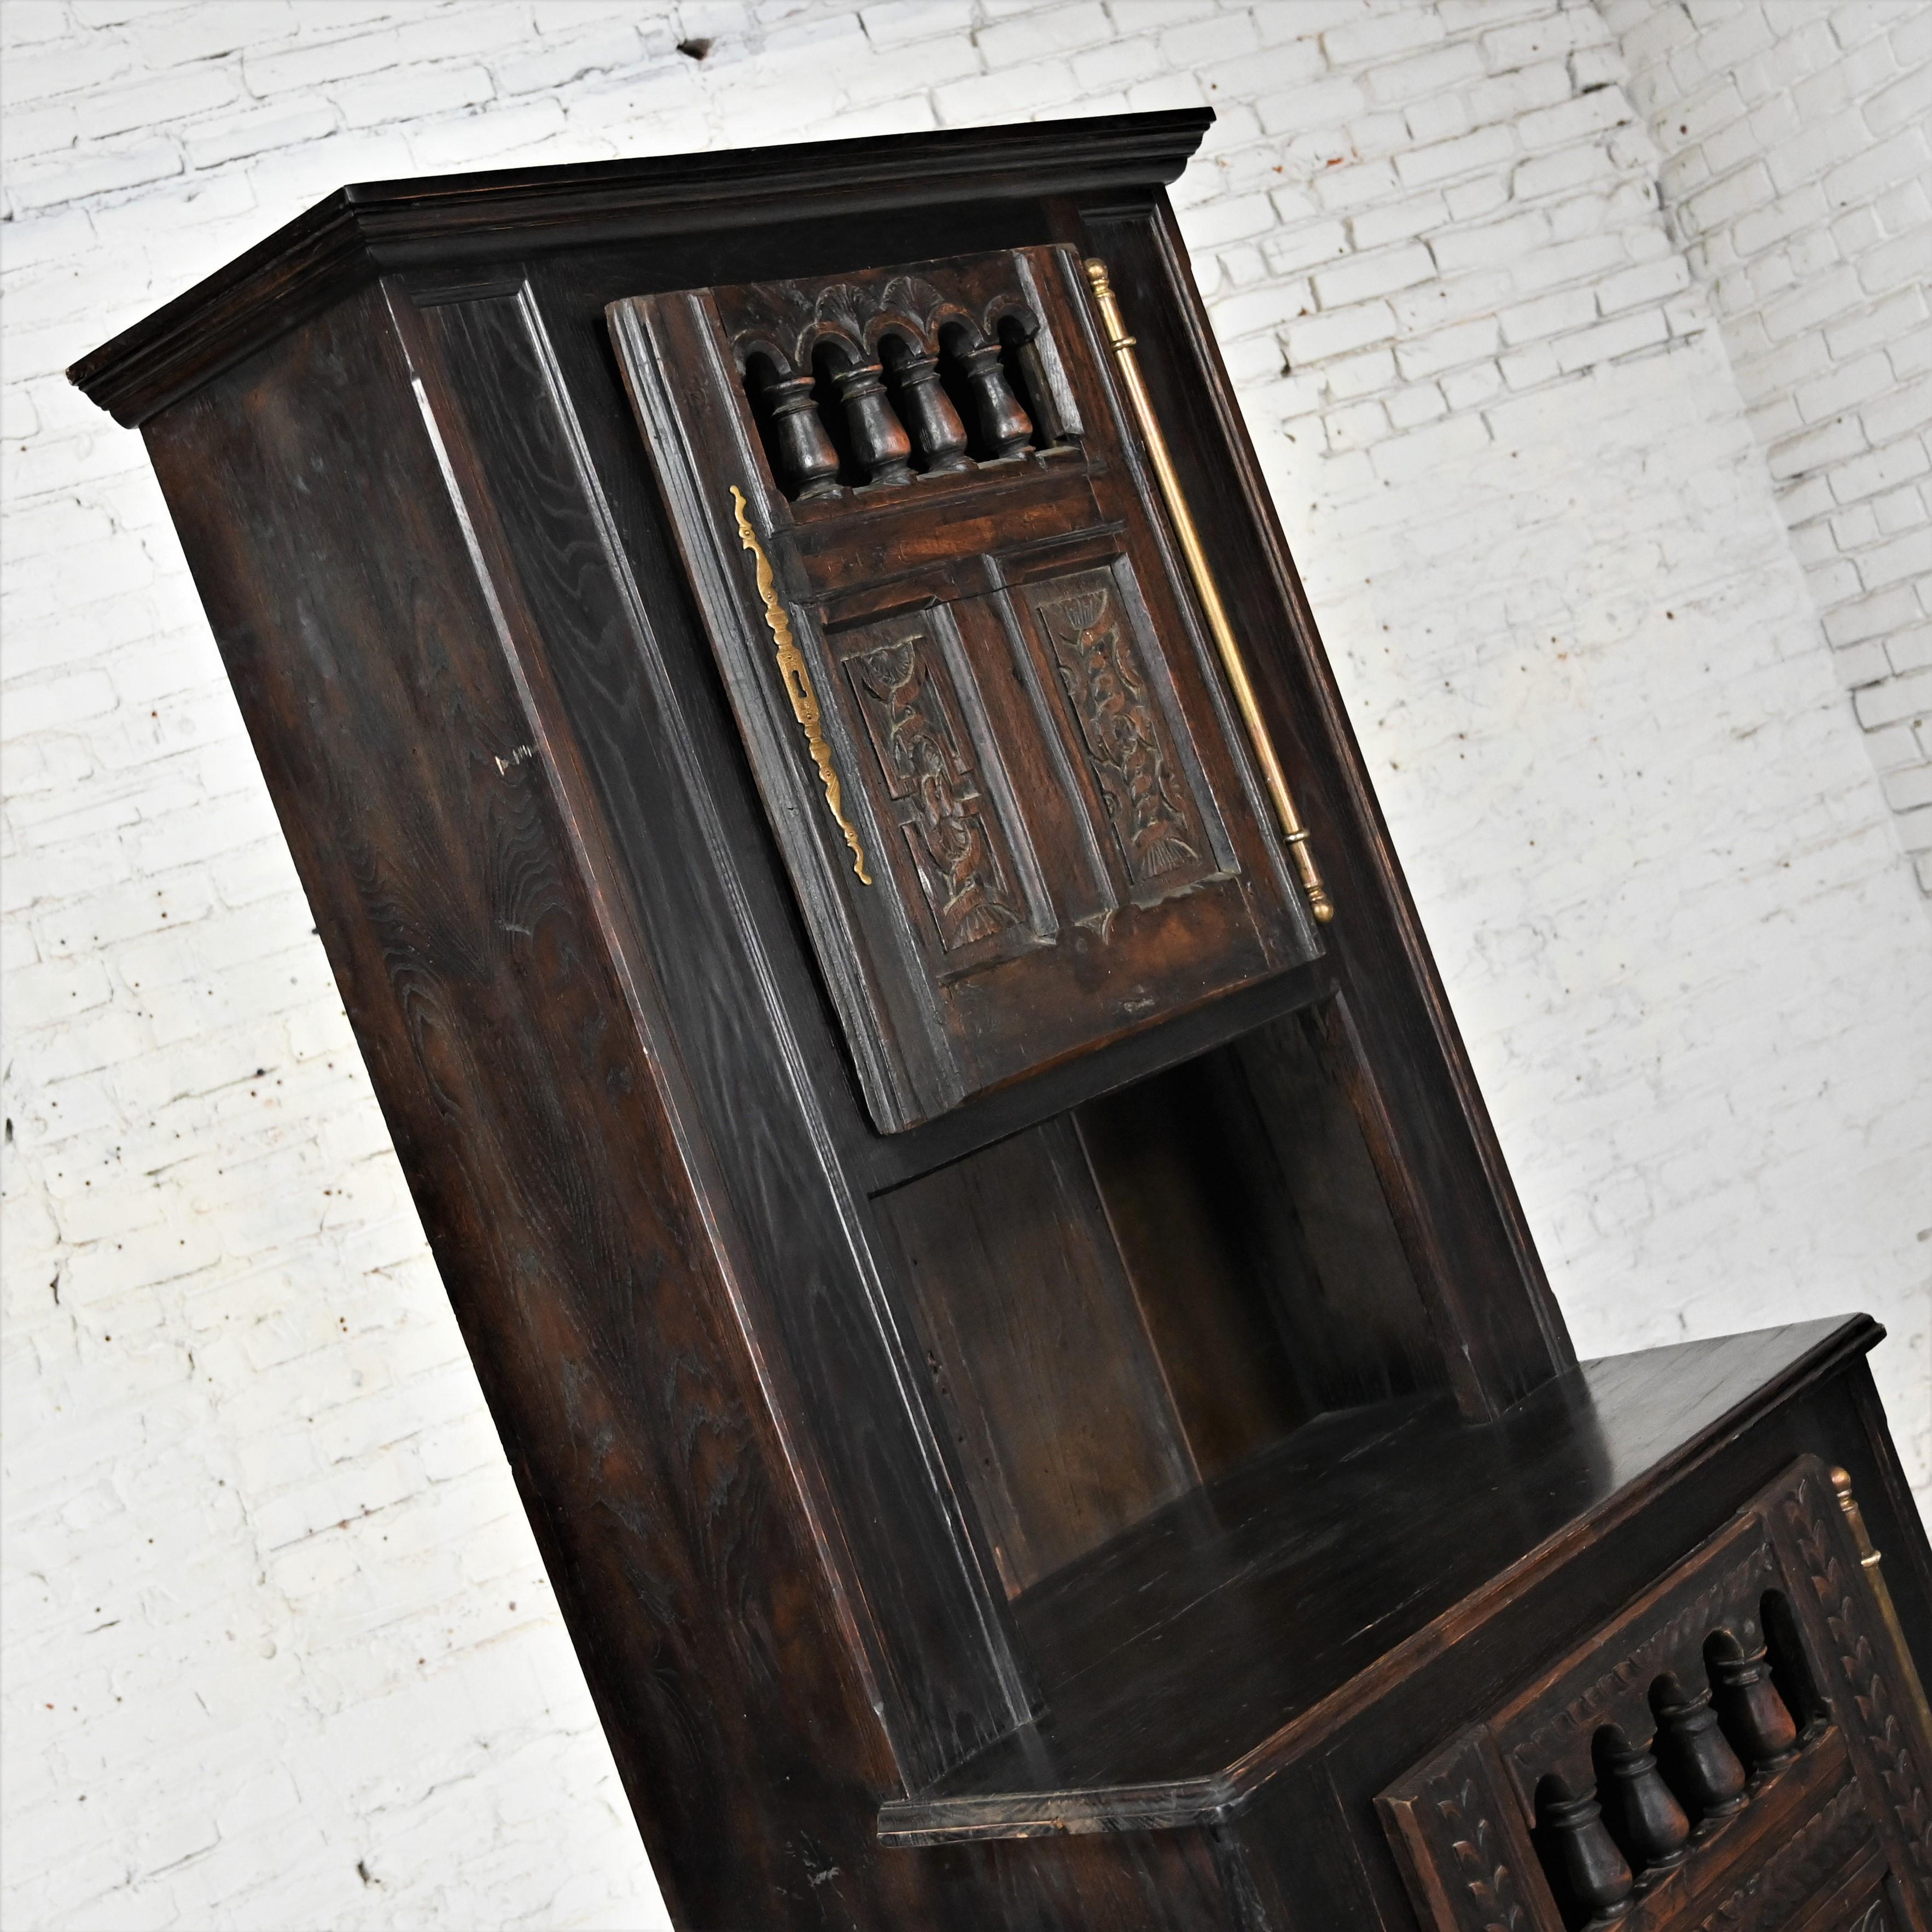 Spanish Colonial Revival Style Eiche Schrank Hutch Cabinet oder Dry Bar Hand geschnitzt (Messing) im Angebot